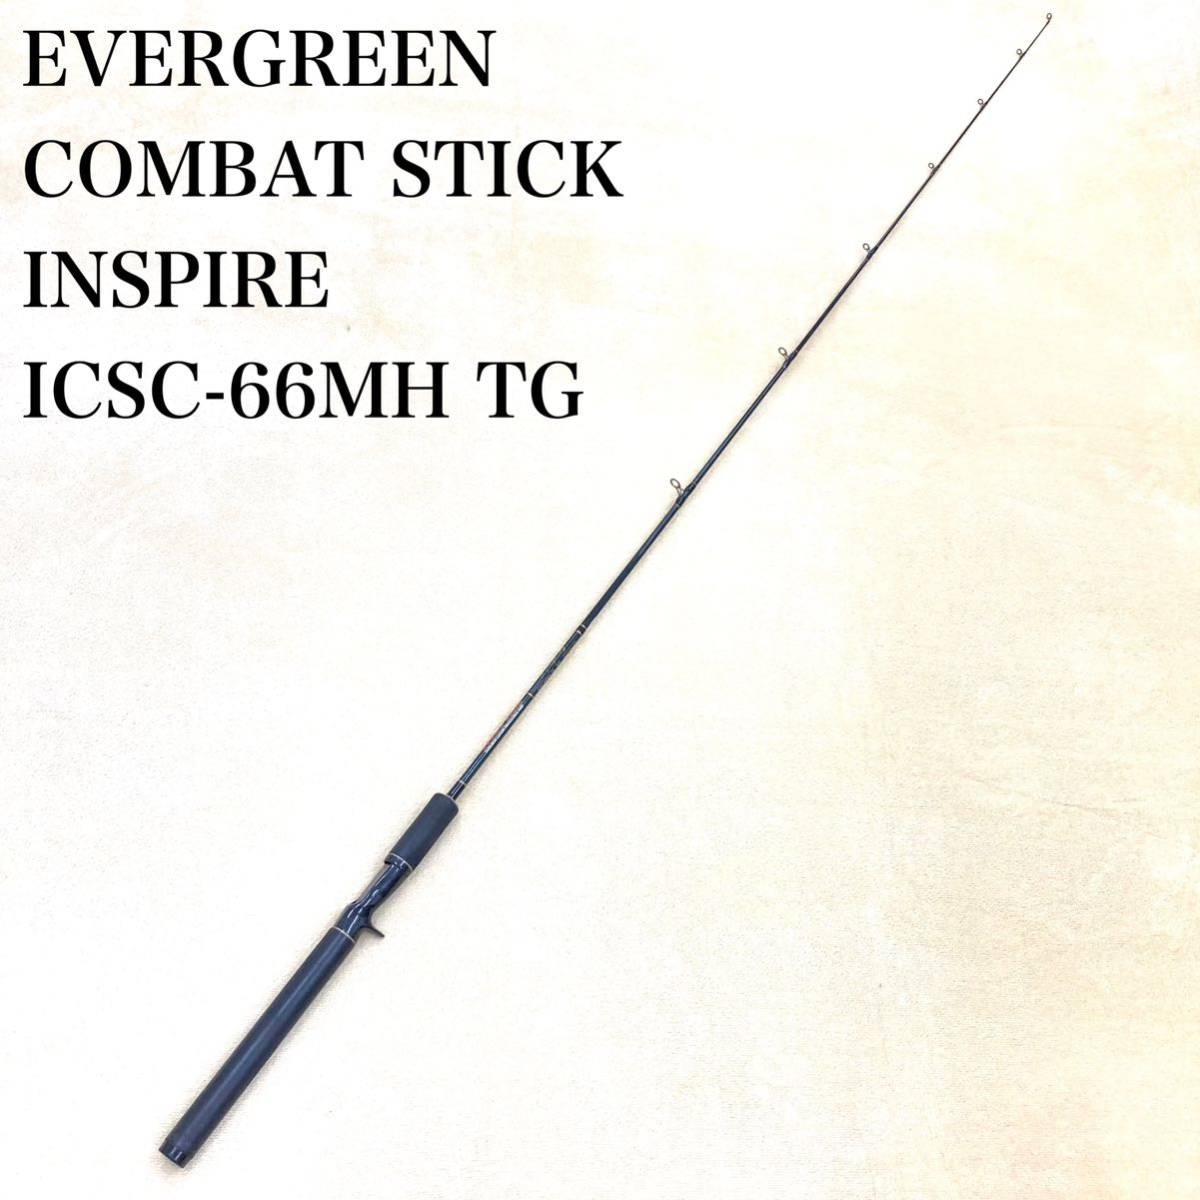 EVERGREEN COMBAT STICK INSPIRE ICSC-66MH TG エバーグリーン コンバットスティック インスパイア ベイト ワンピース バスロッド 釣具 竿